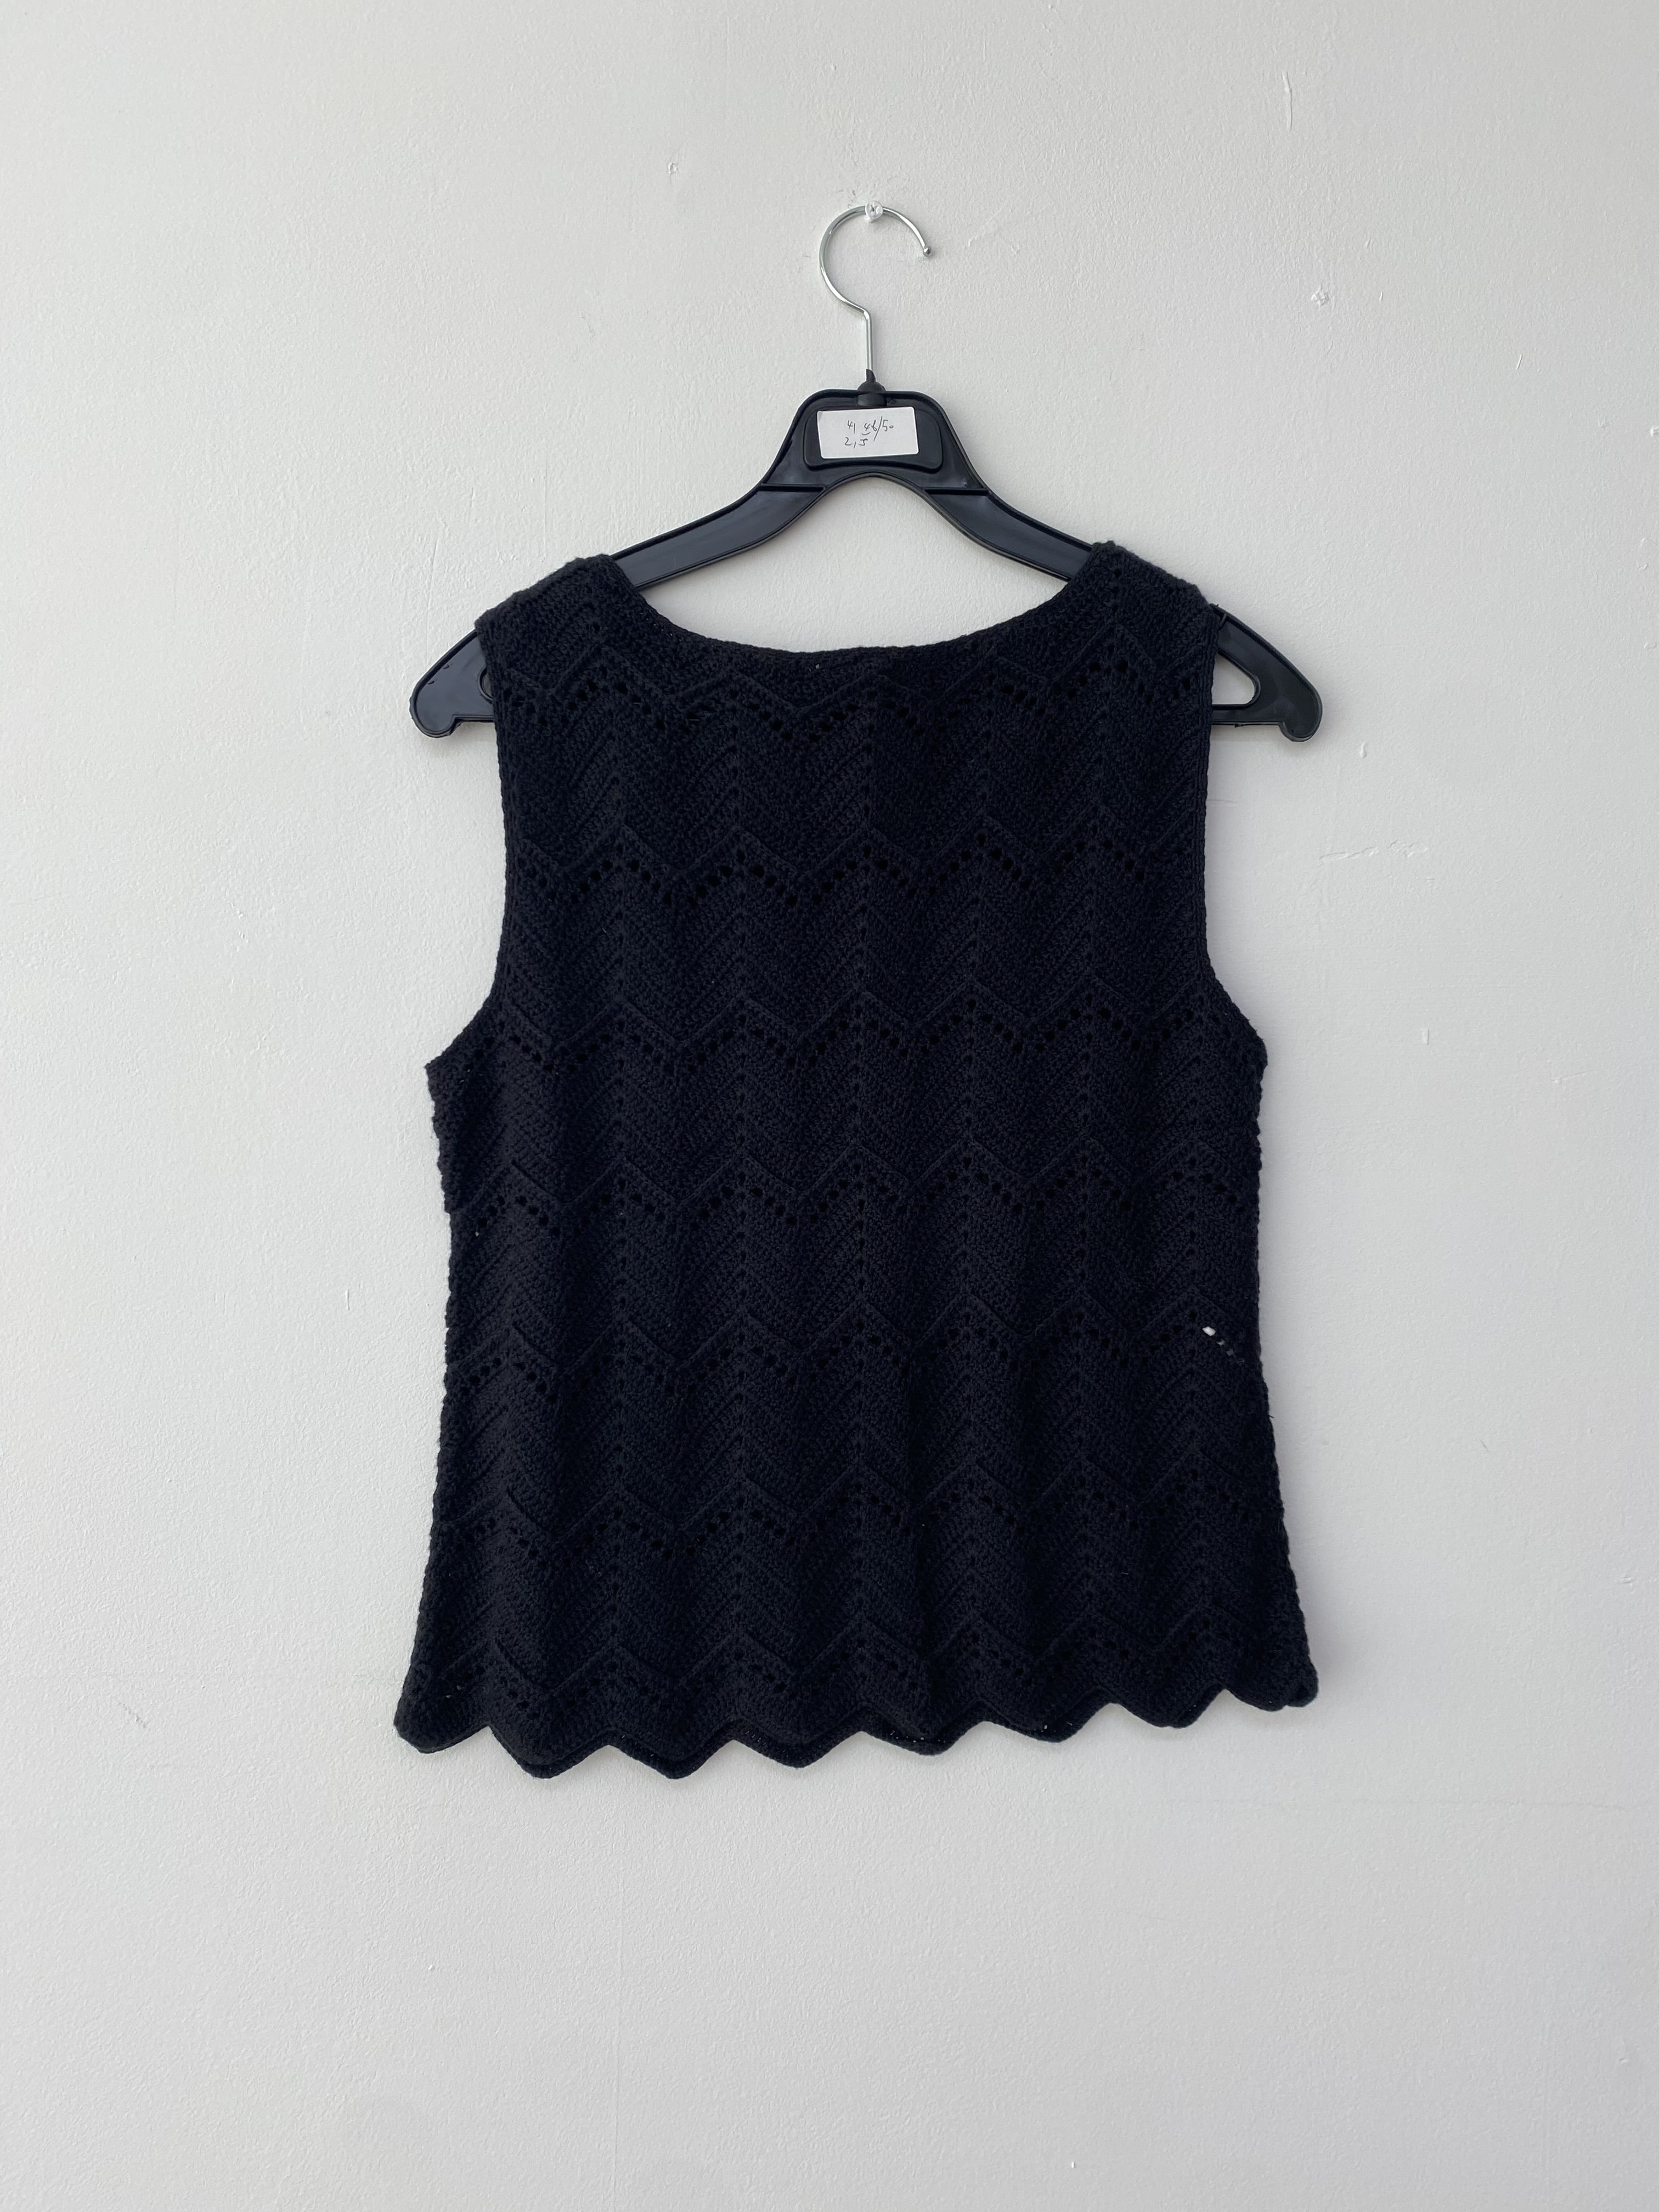 Black wave crochet knit top